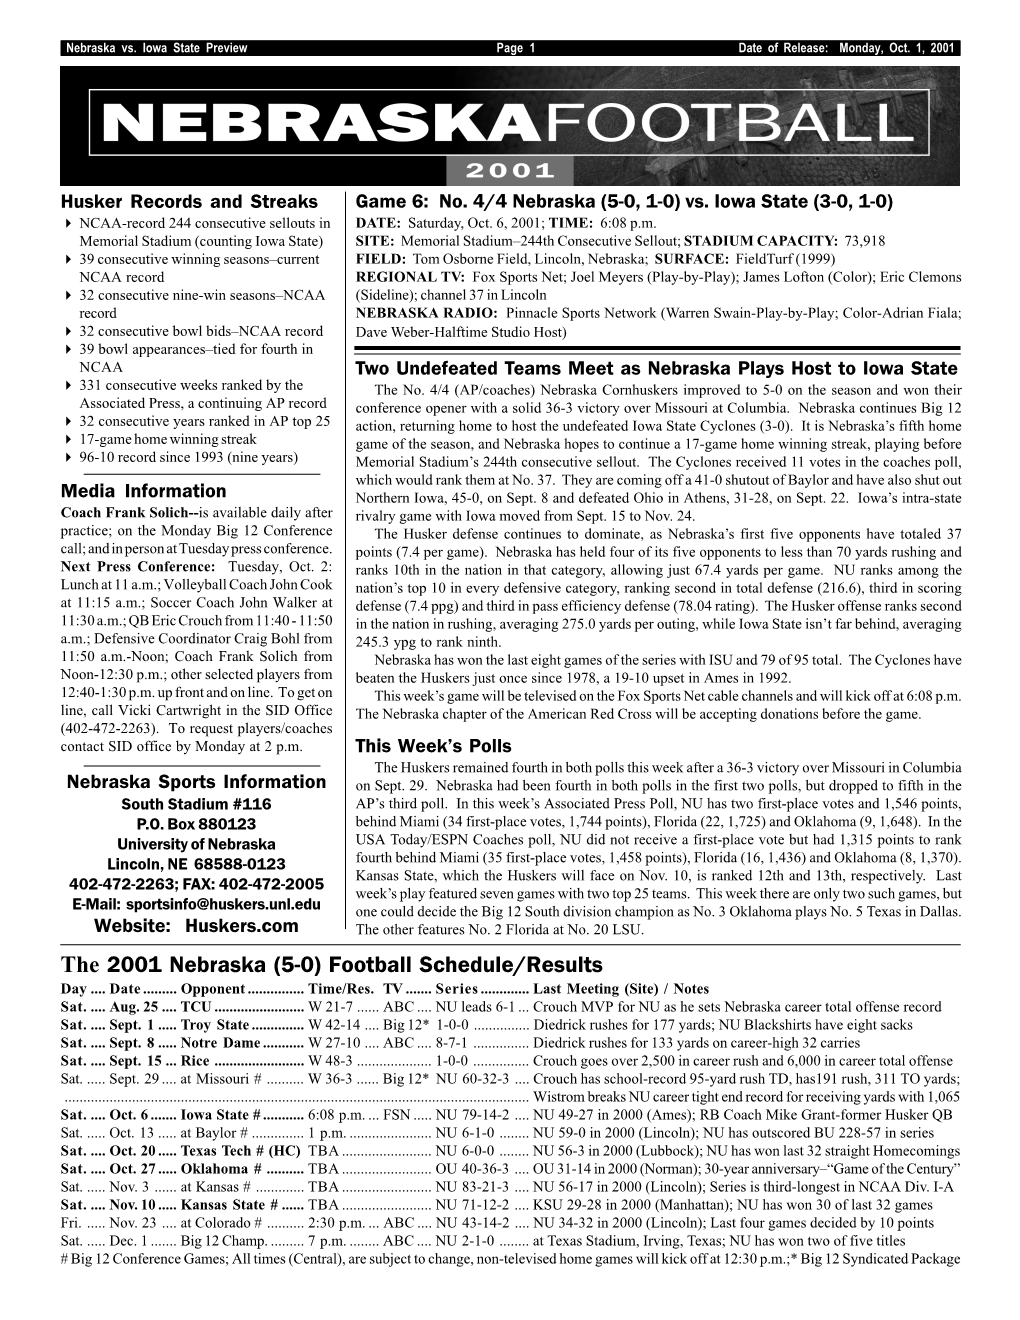 The 2001 Nebraska (5-0) Football Schedule/Results Day